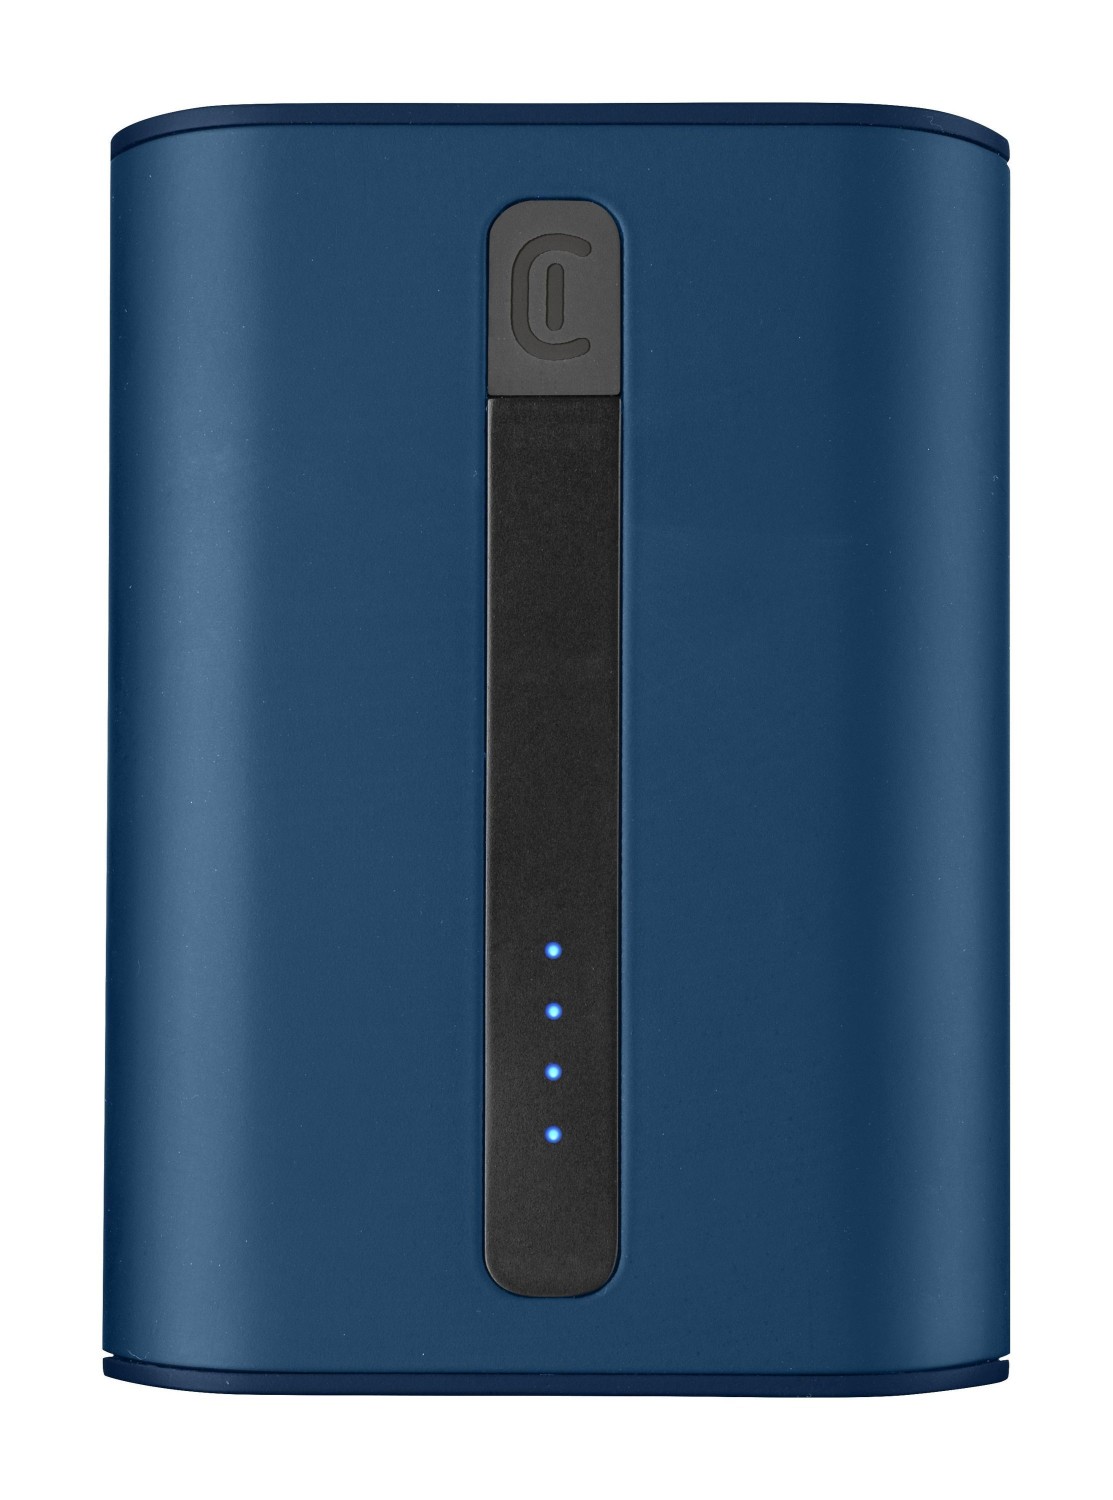 Powerbanka Cellularline Thunder 10000 mAh, modrá